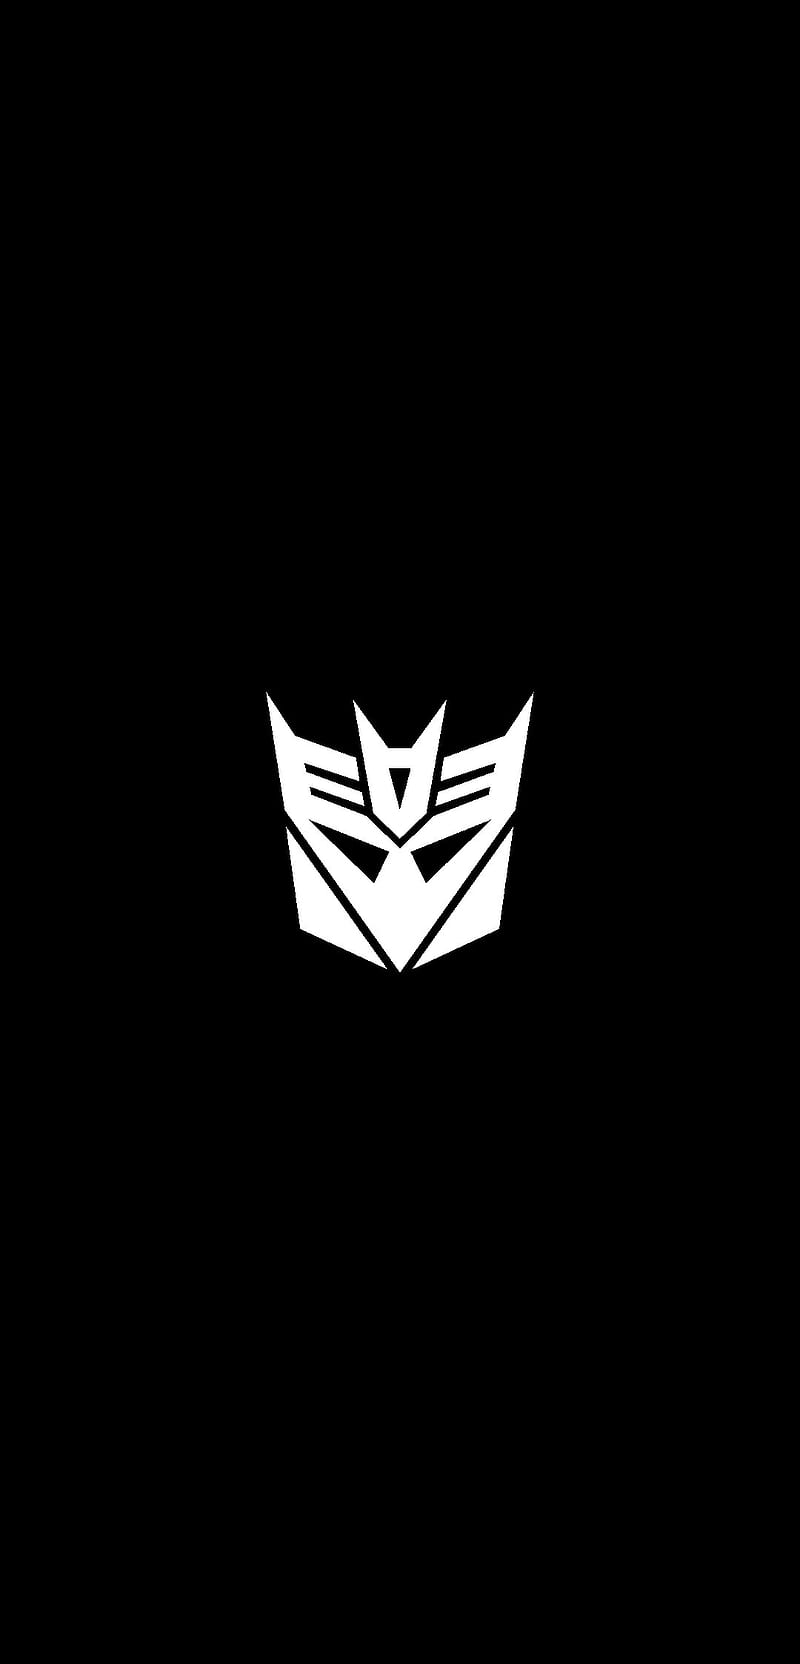 Decepticon logo by bagera3005 on DeviantArt